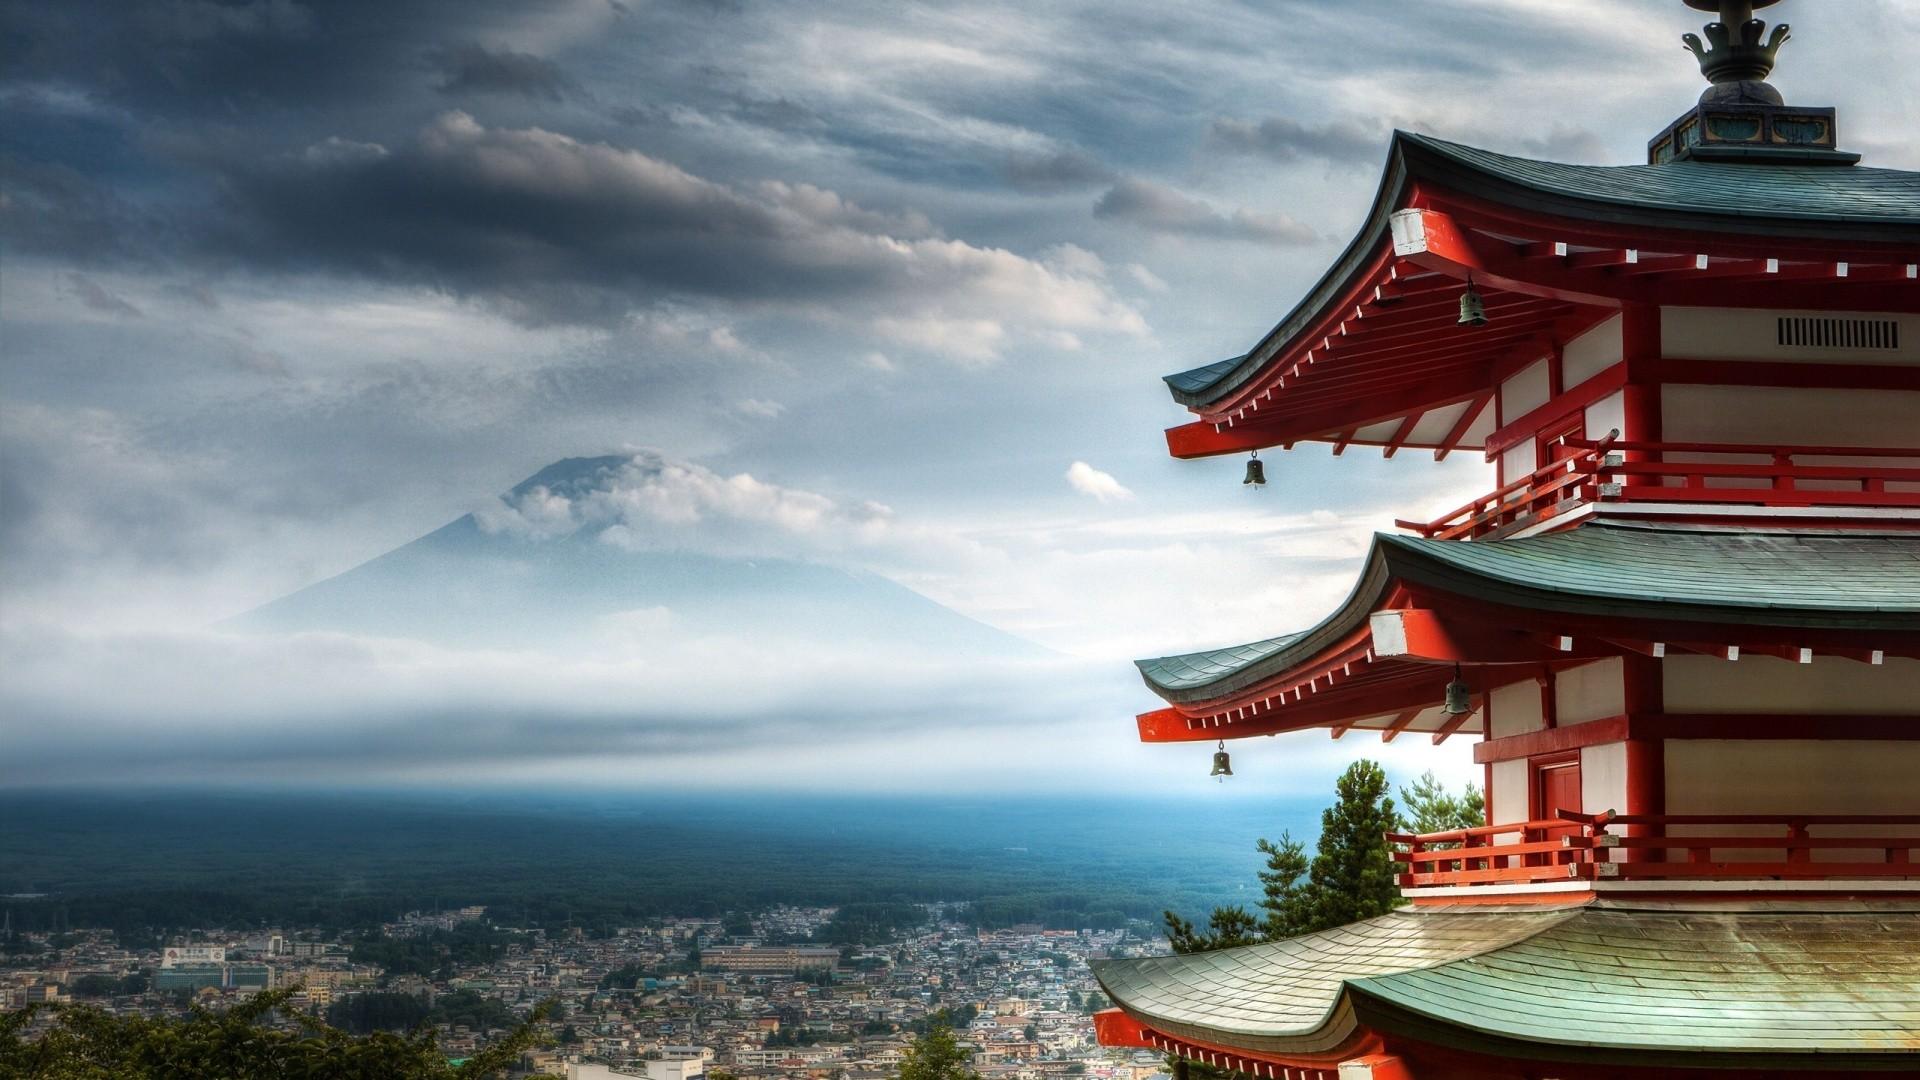 Mount Fuji 4K Ultra Hd Japan Wallpapers